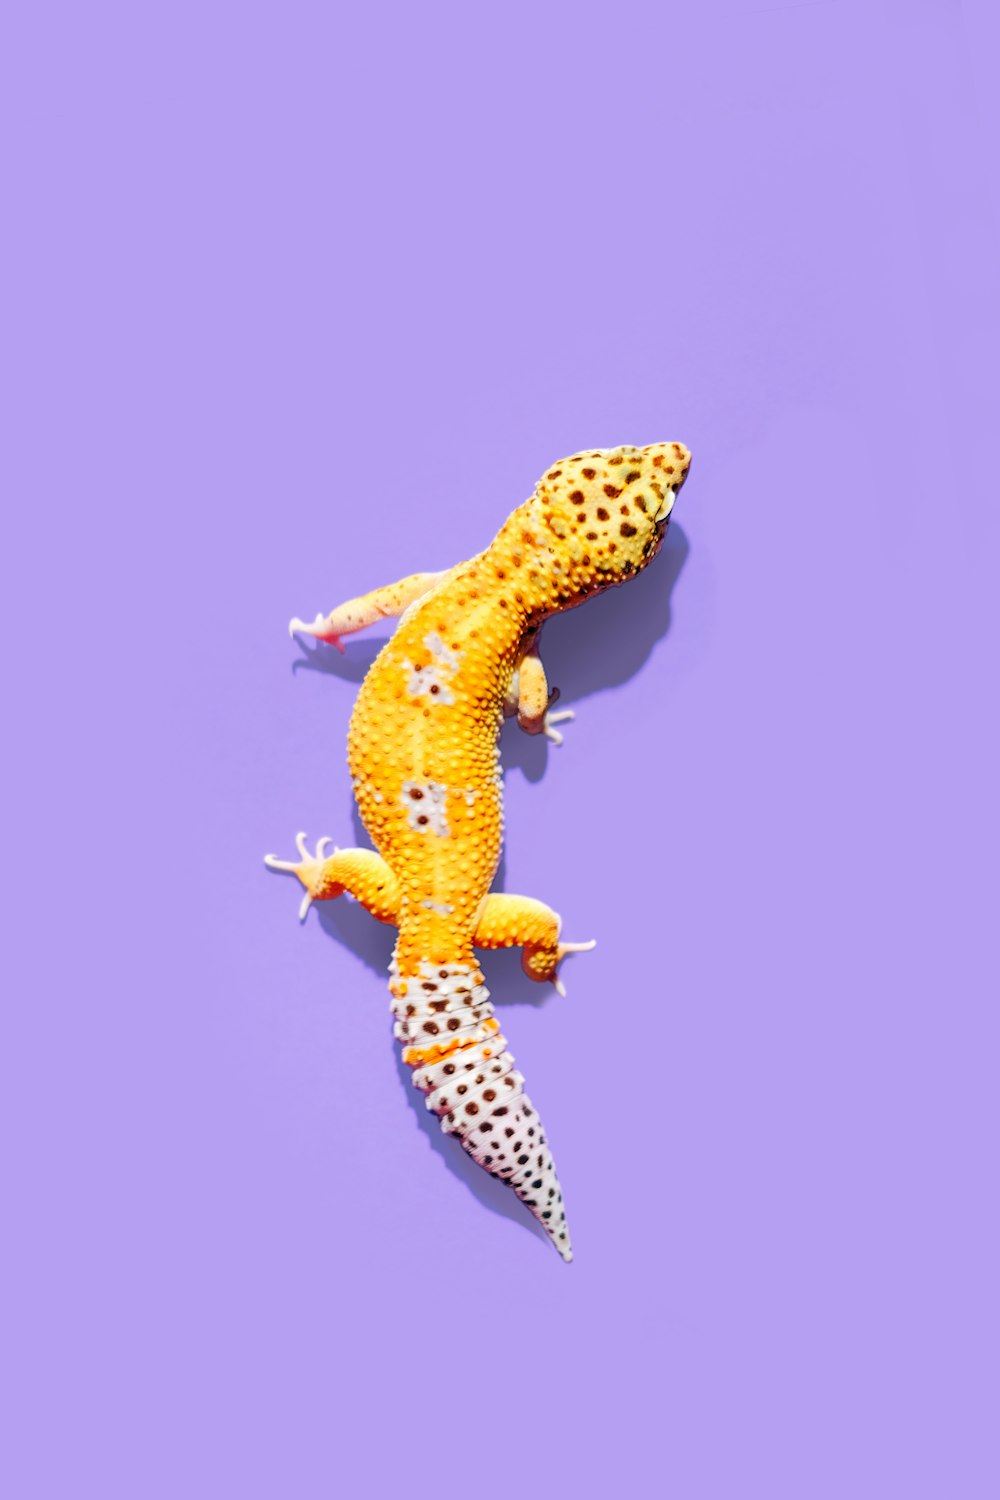 Best 500+ Gecko Pictures | Download Free Images on Unsplash